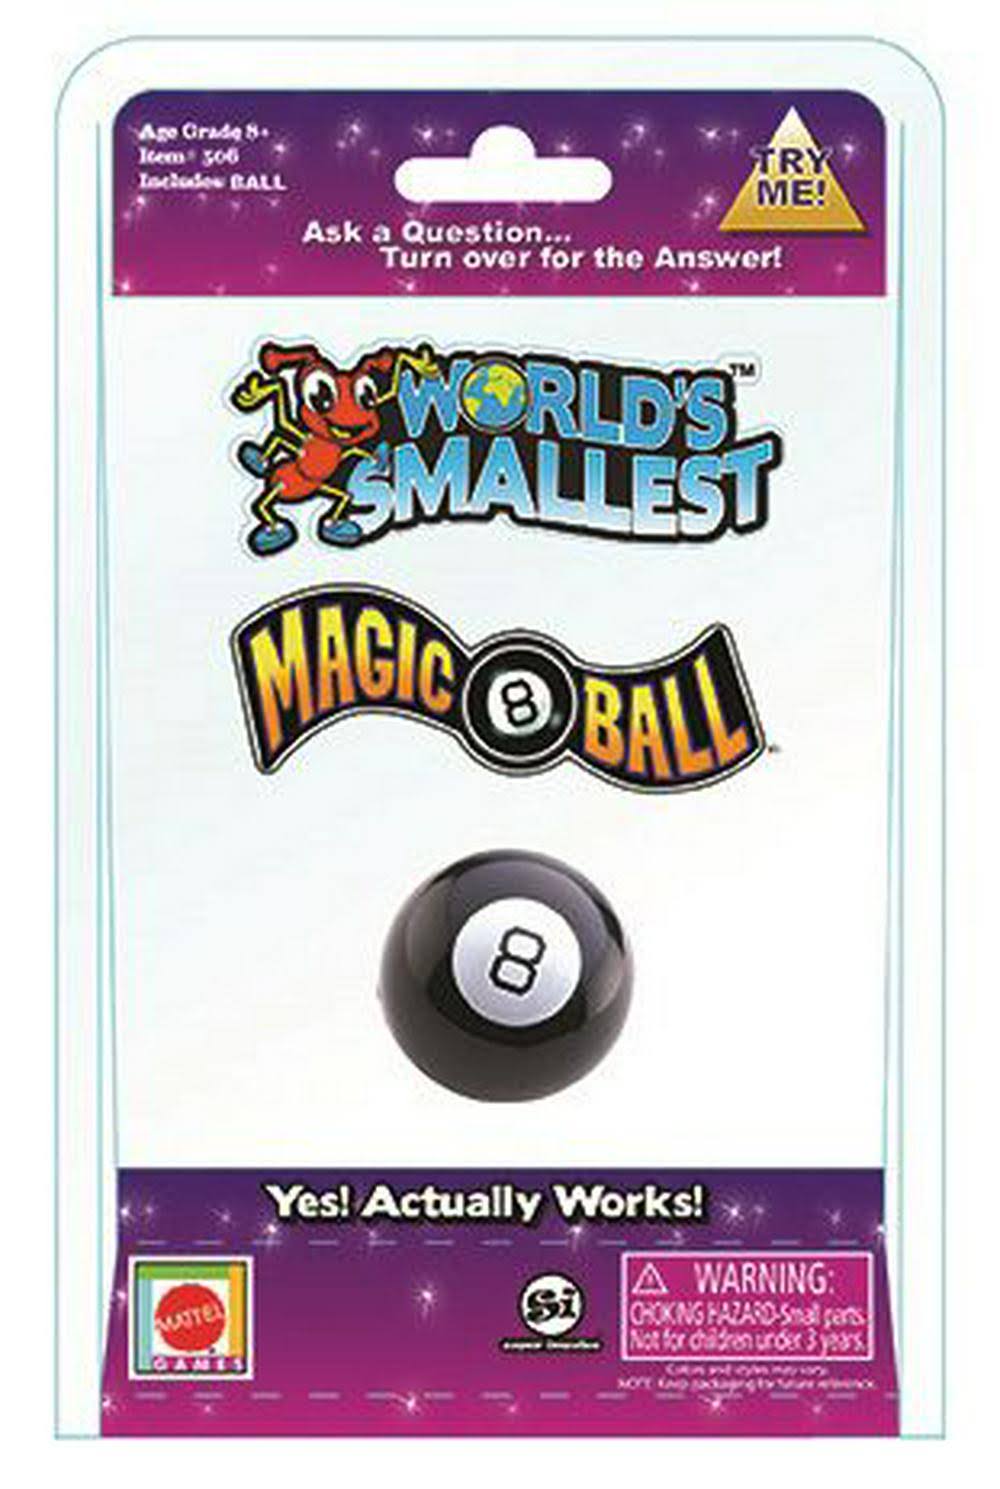 The World's Smallest Magic 8 Ball